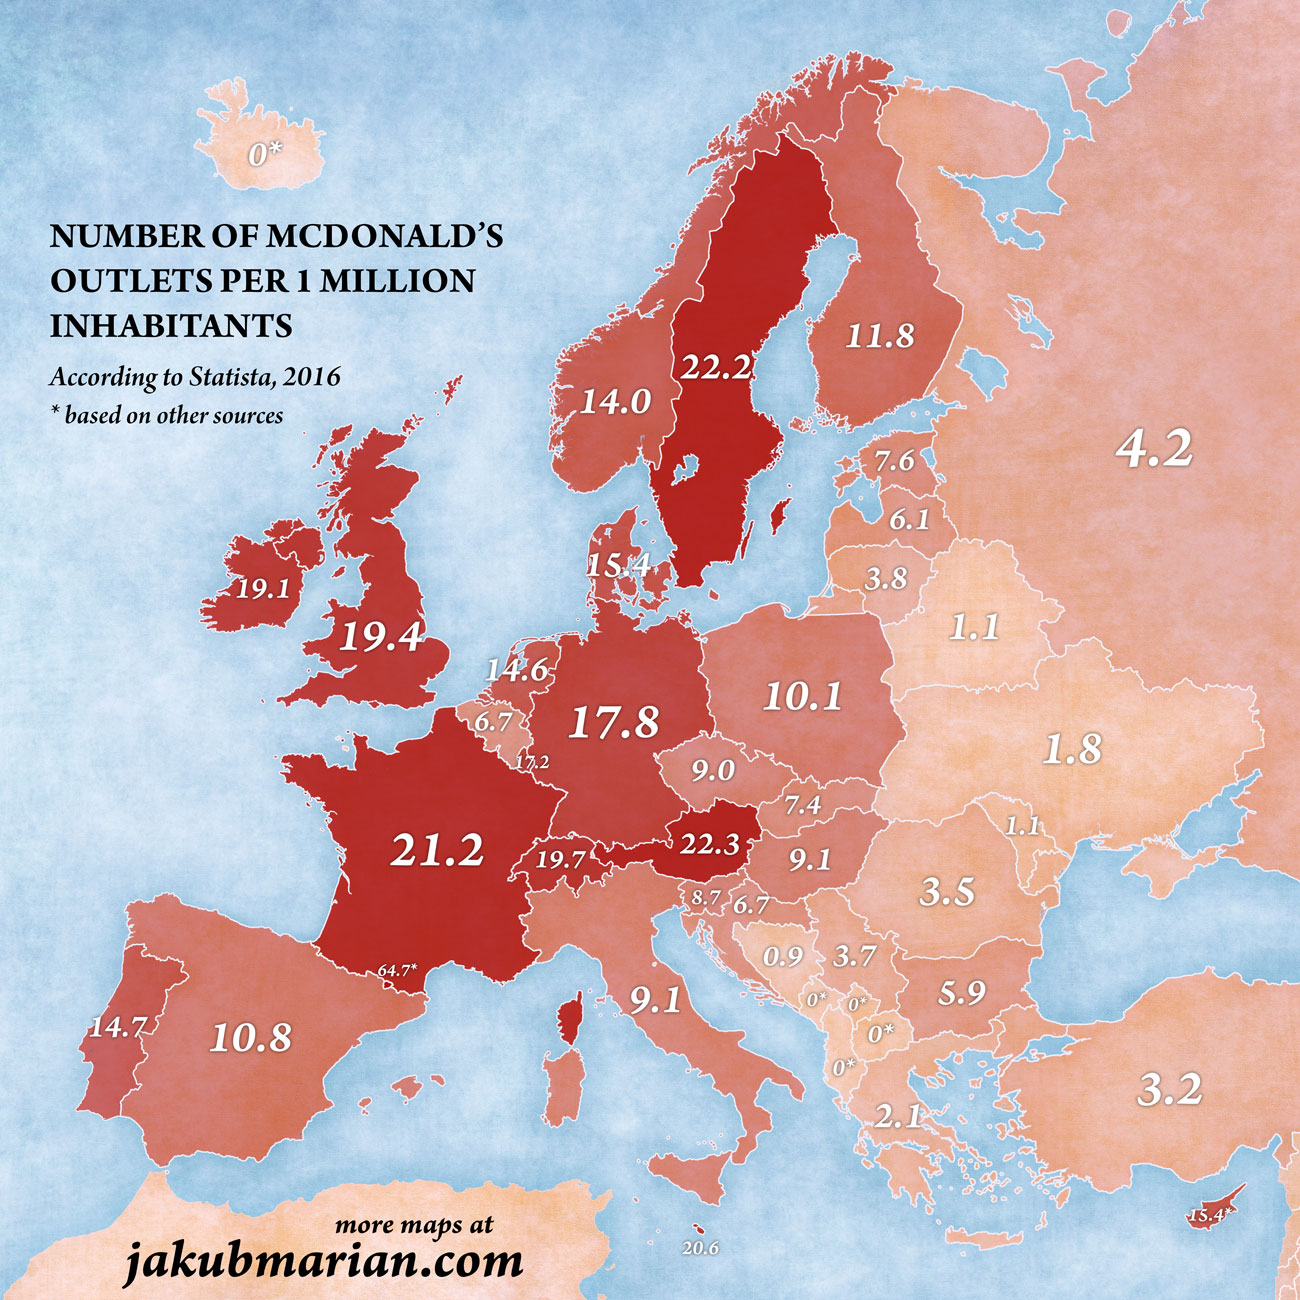 Number of McDonald’s per capita in Europe in 2016.